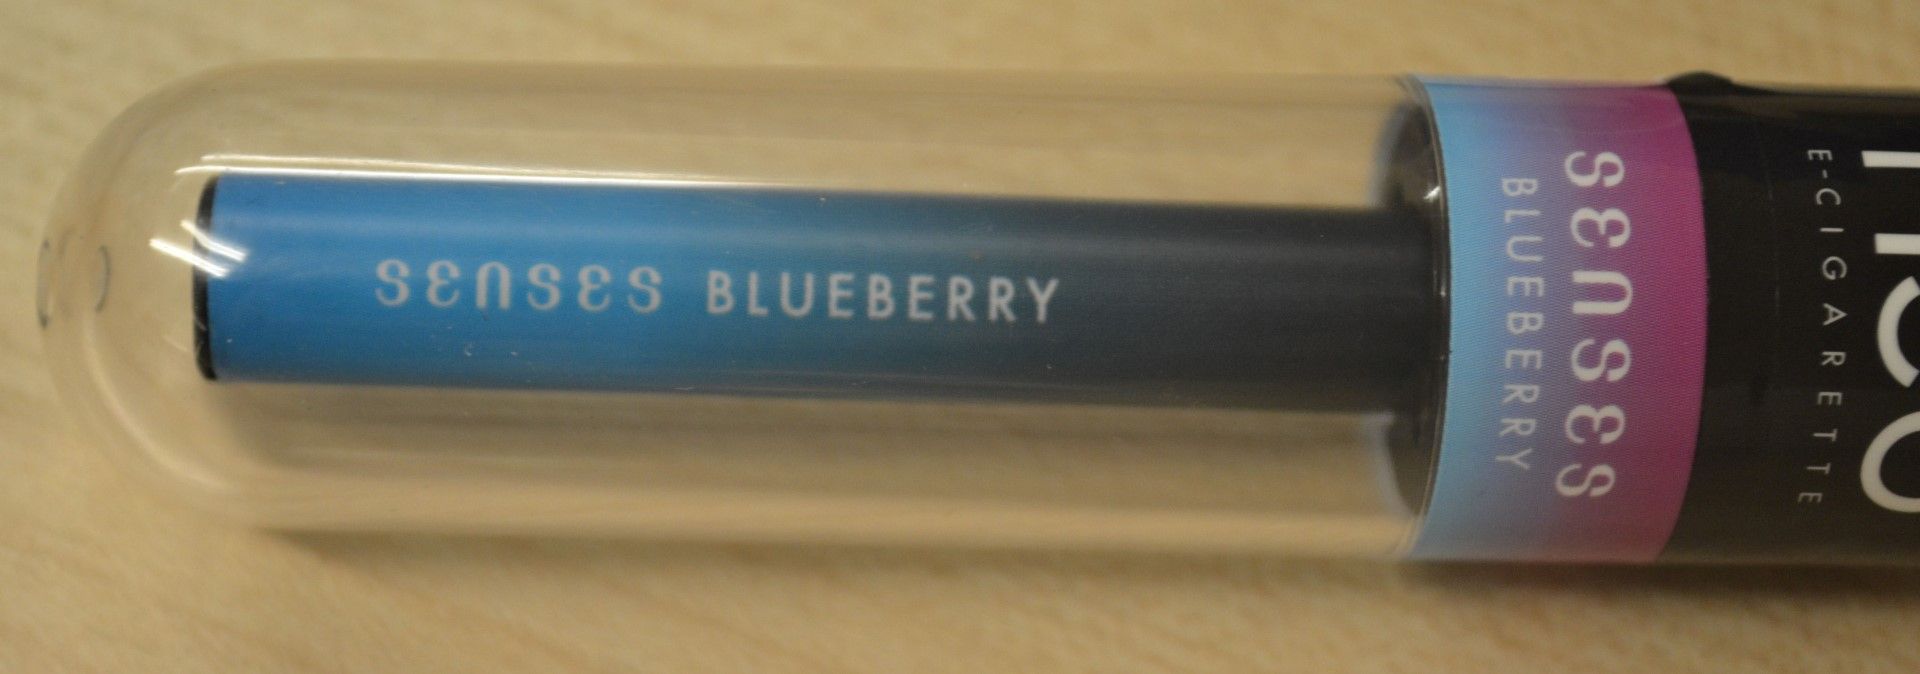 30 x Neo E-Cigarettes Senses Shisha Blueberry Disposable Electronic Cigarettes - New & Sealed Stock - Image 6 of 6